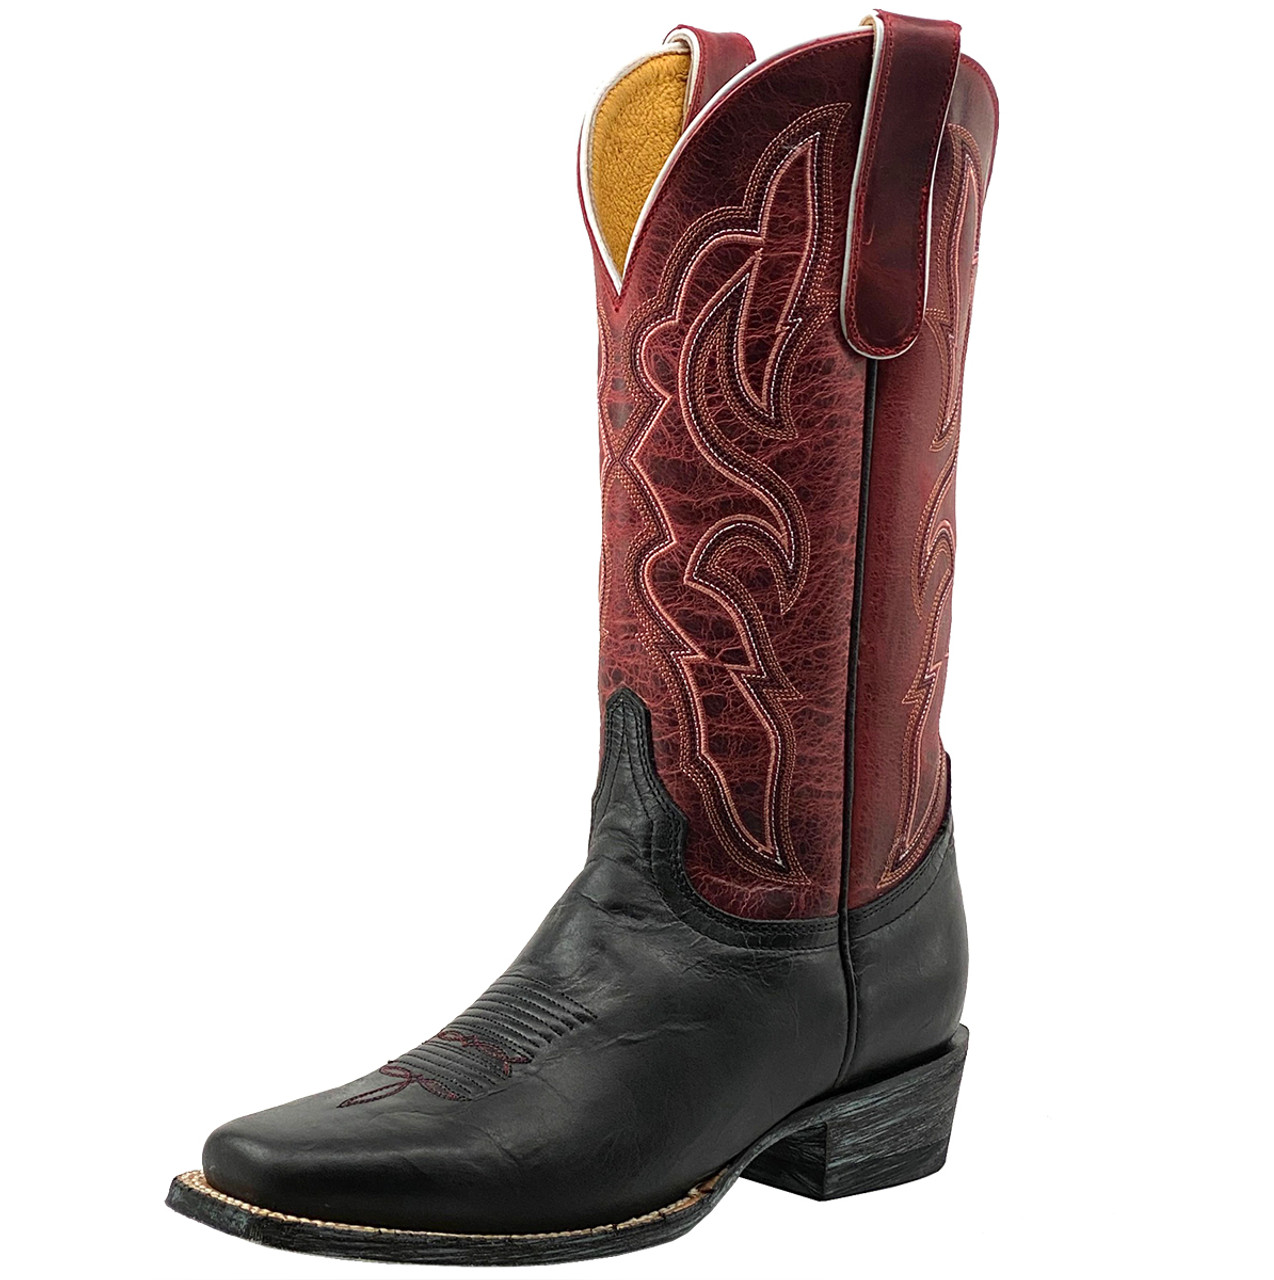 women's cowhide boots